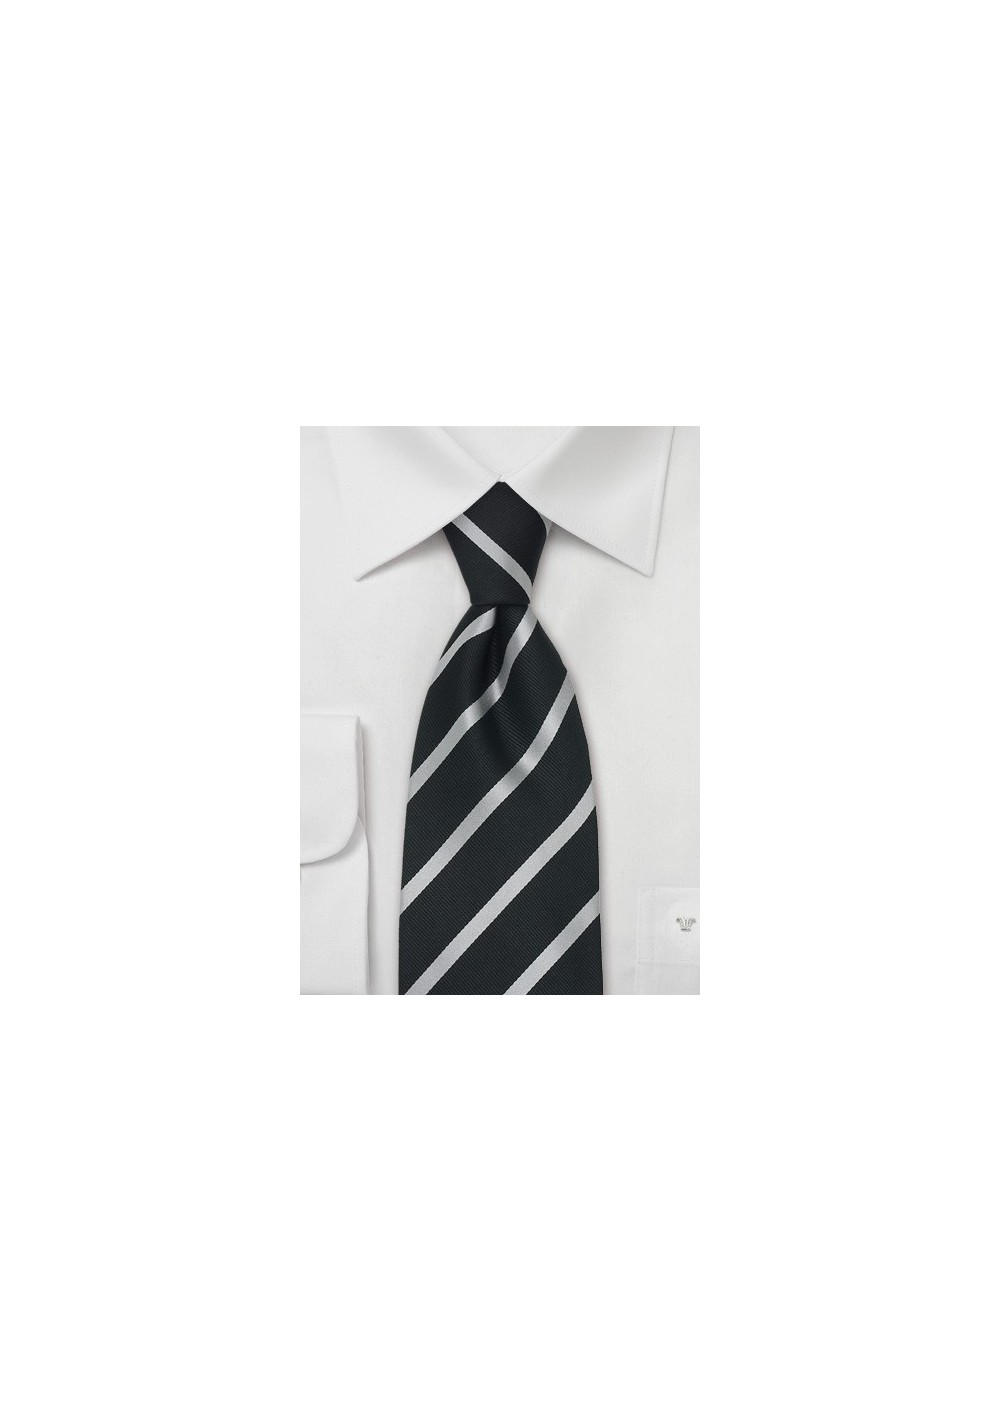 Black & Silver Striped Necktie in XL Length